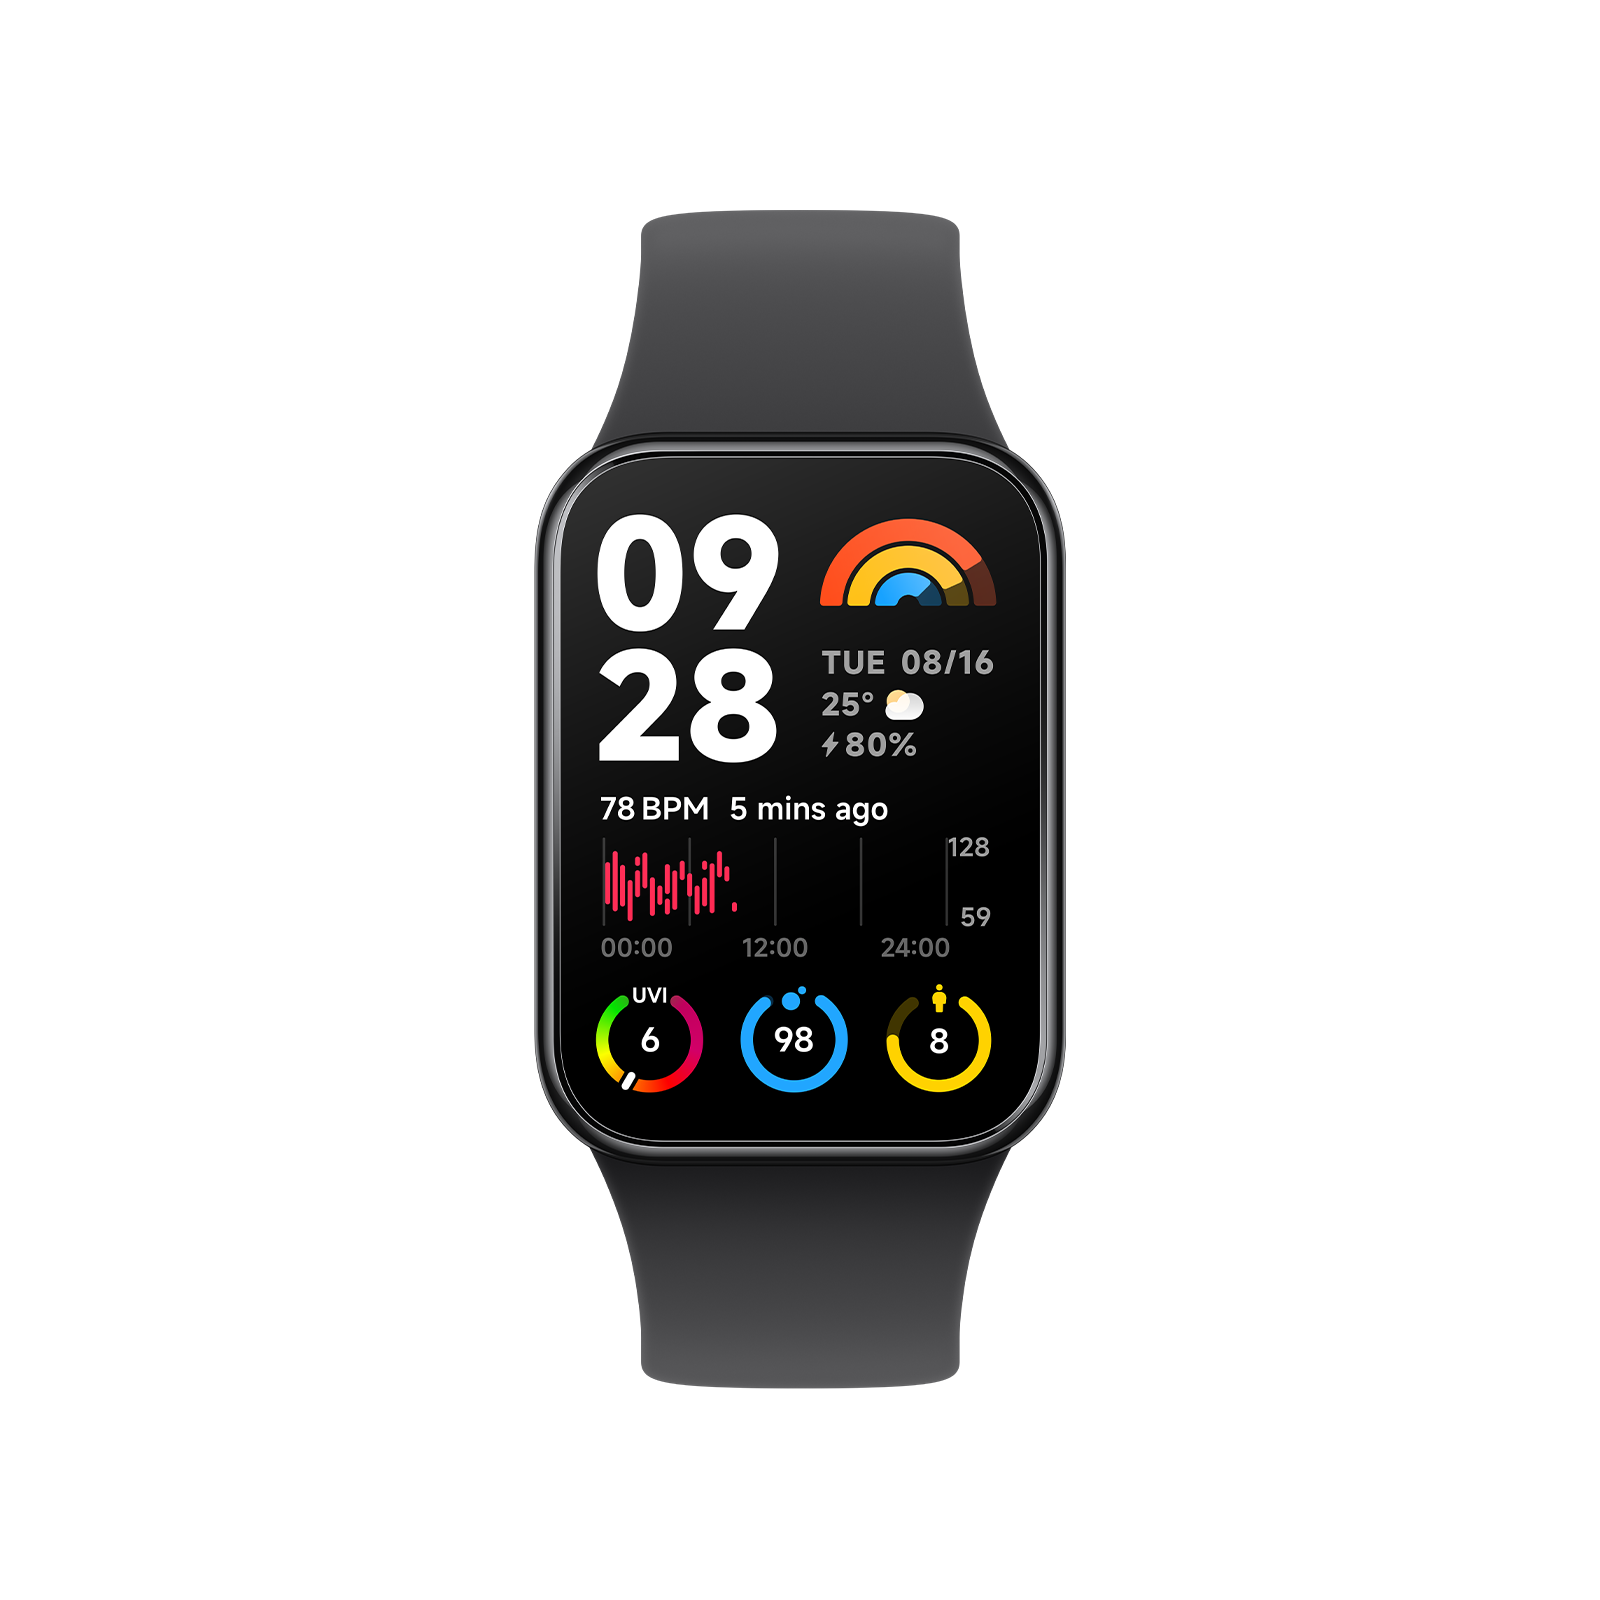 Wearables app testing | Smart watch app testing by Testvox